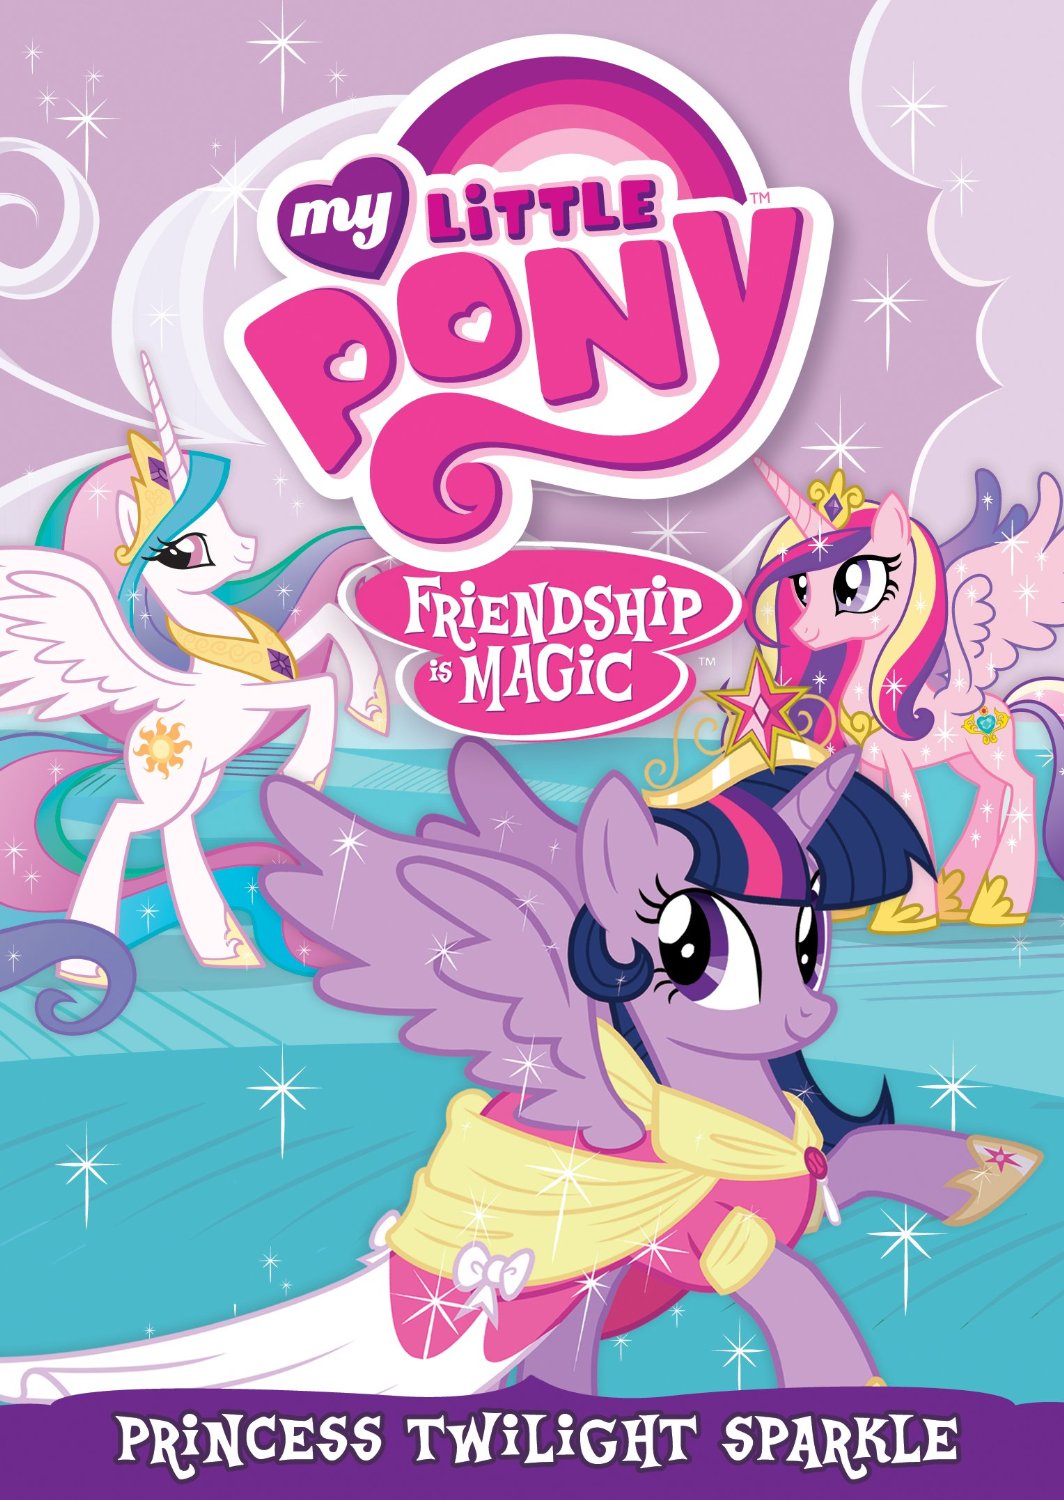 My Little Pony: Friendship is Magic: Princess Twilight Sparkle DVD Review